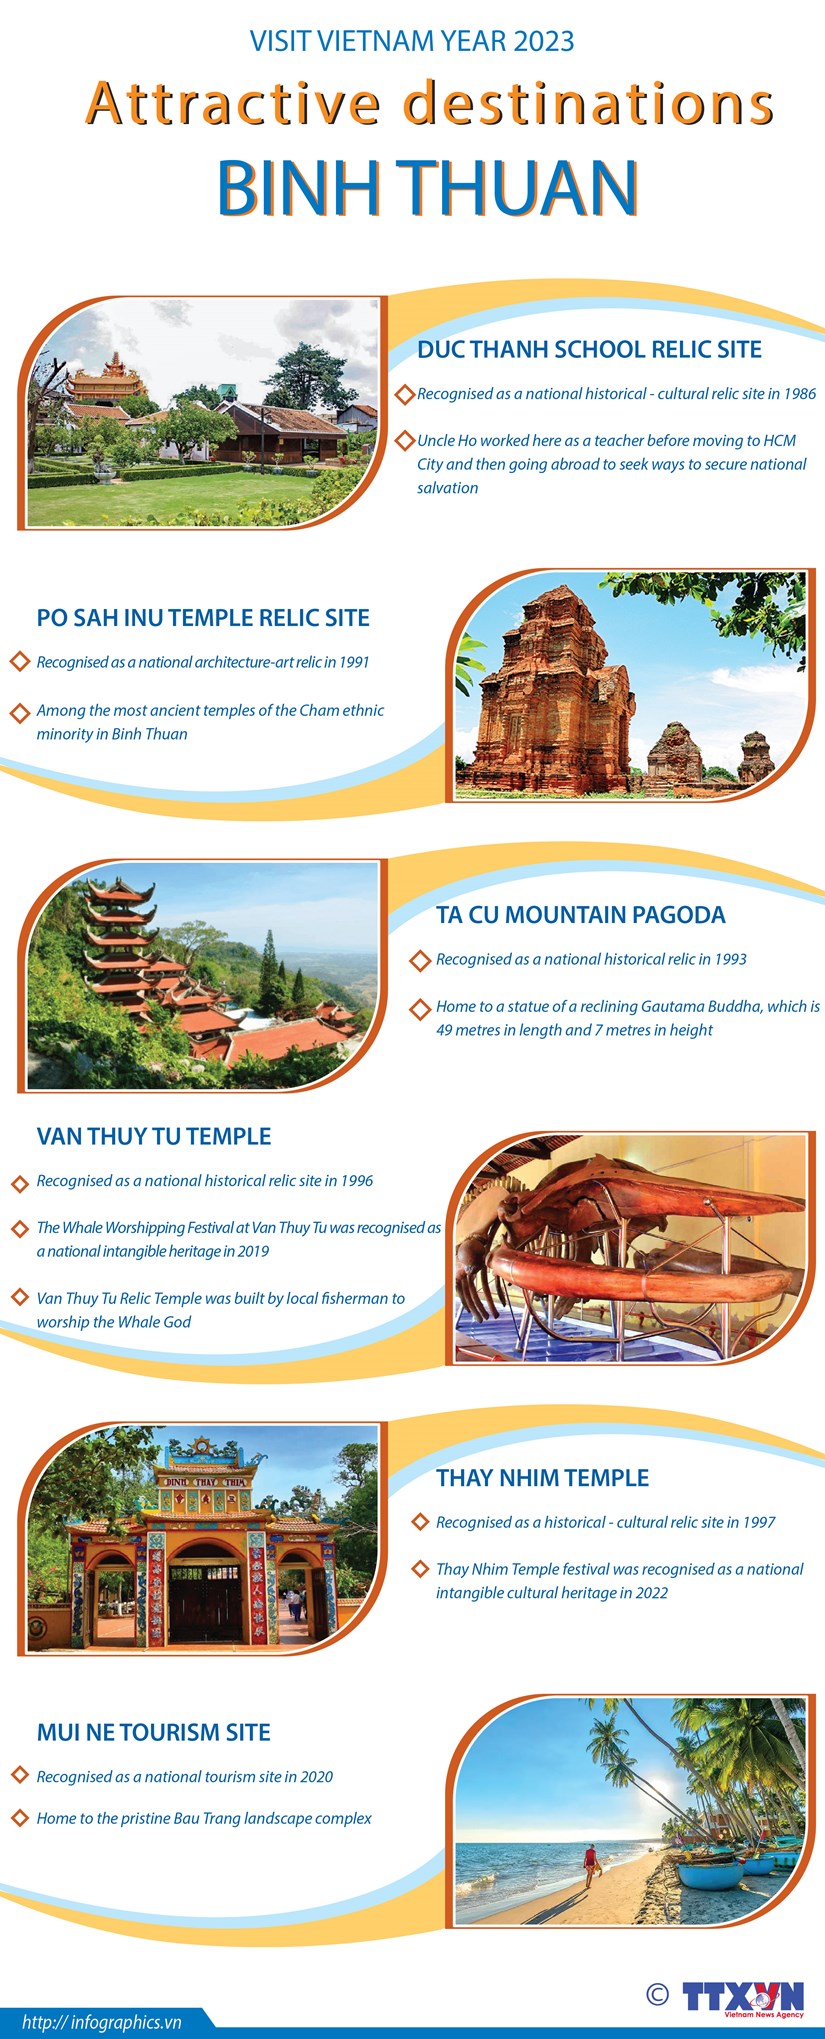 A tour to fabulous Binh Thuan province hinh anh 1